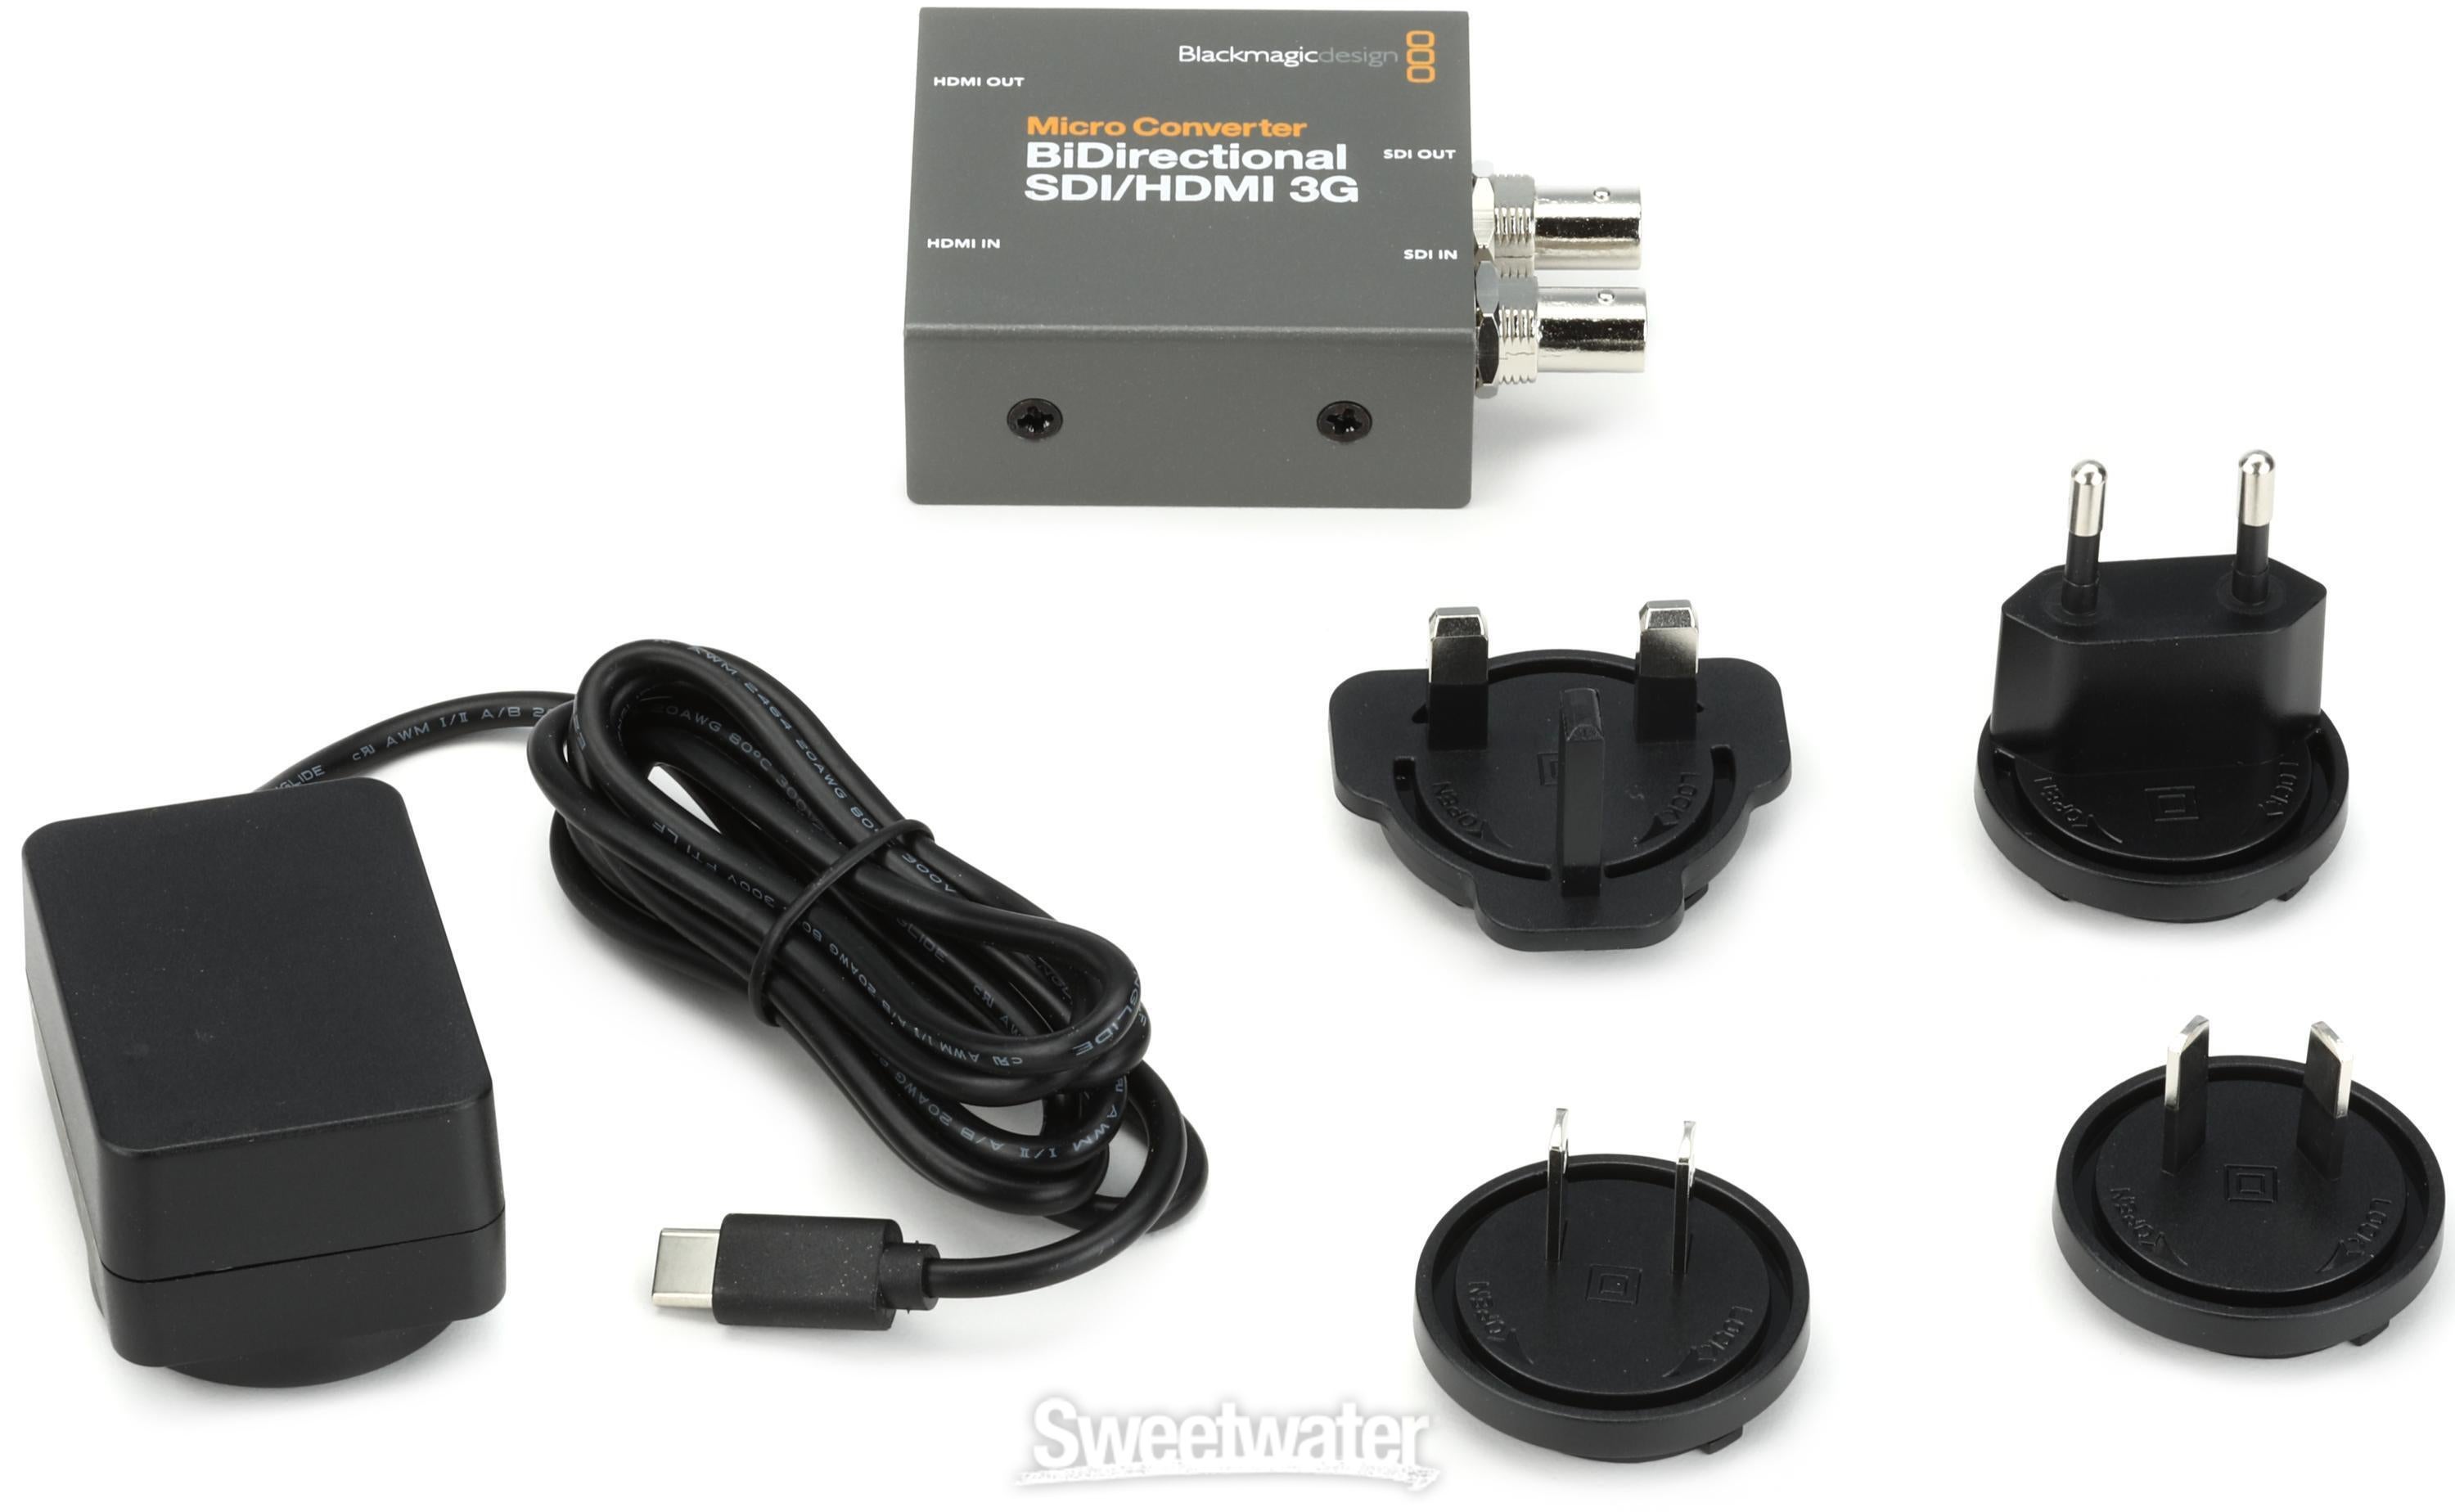 Blackmagic Design Bidirectional SDI/HDMI 3G Micro Converter with